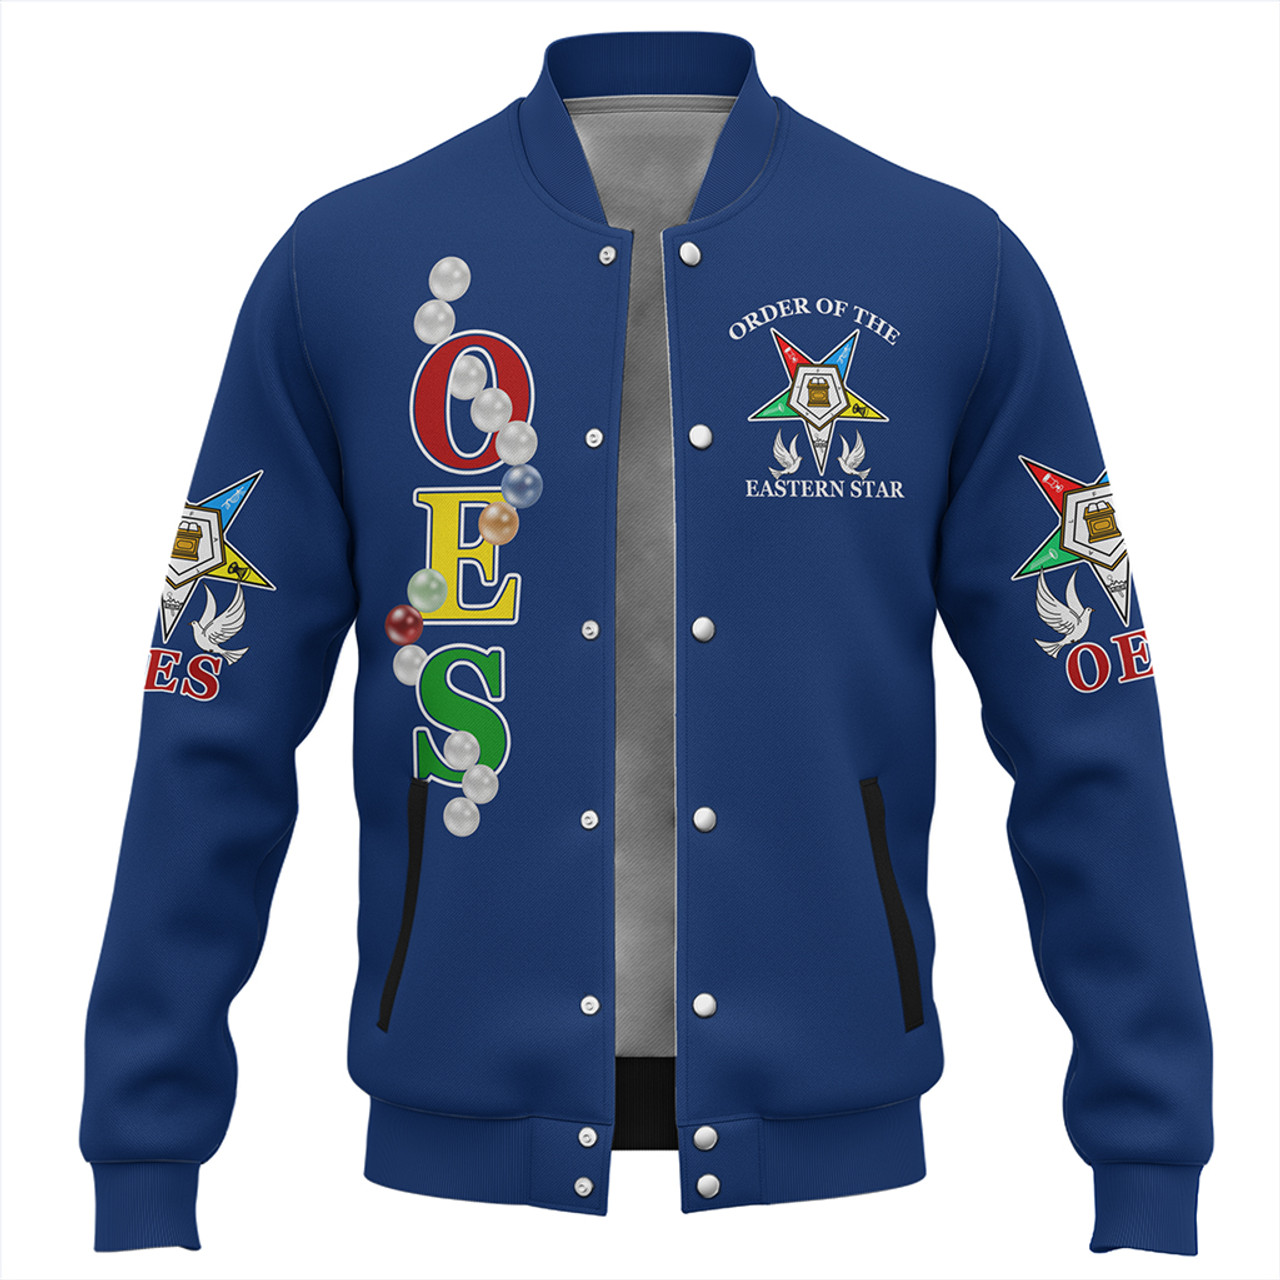 Order of the Eastern Star Baseball Jacket Pearls Blue